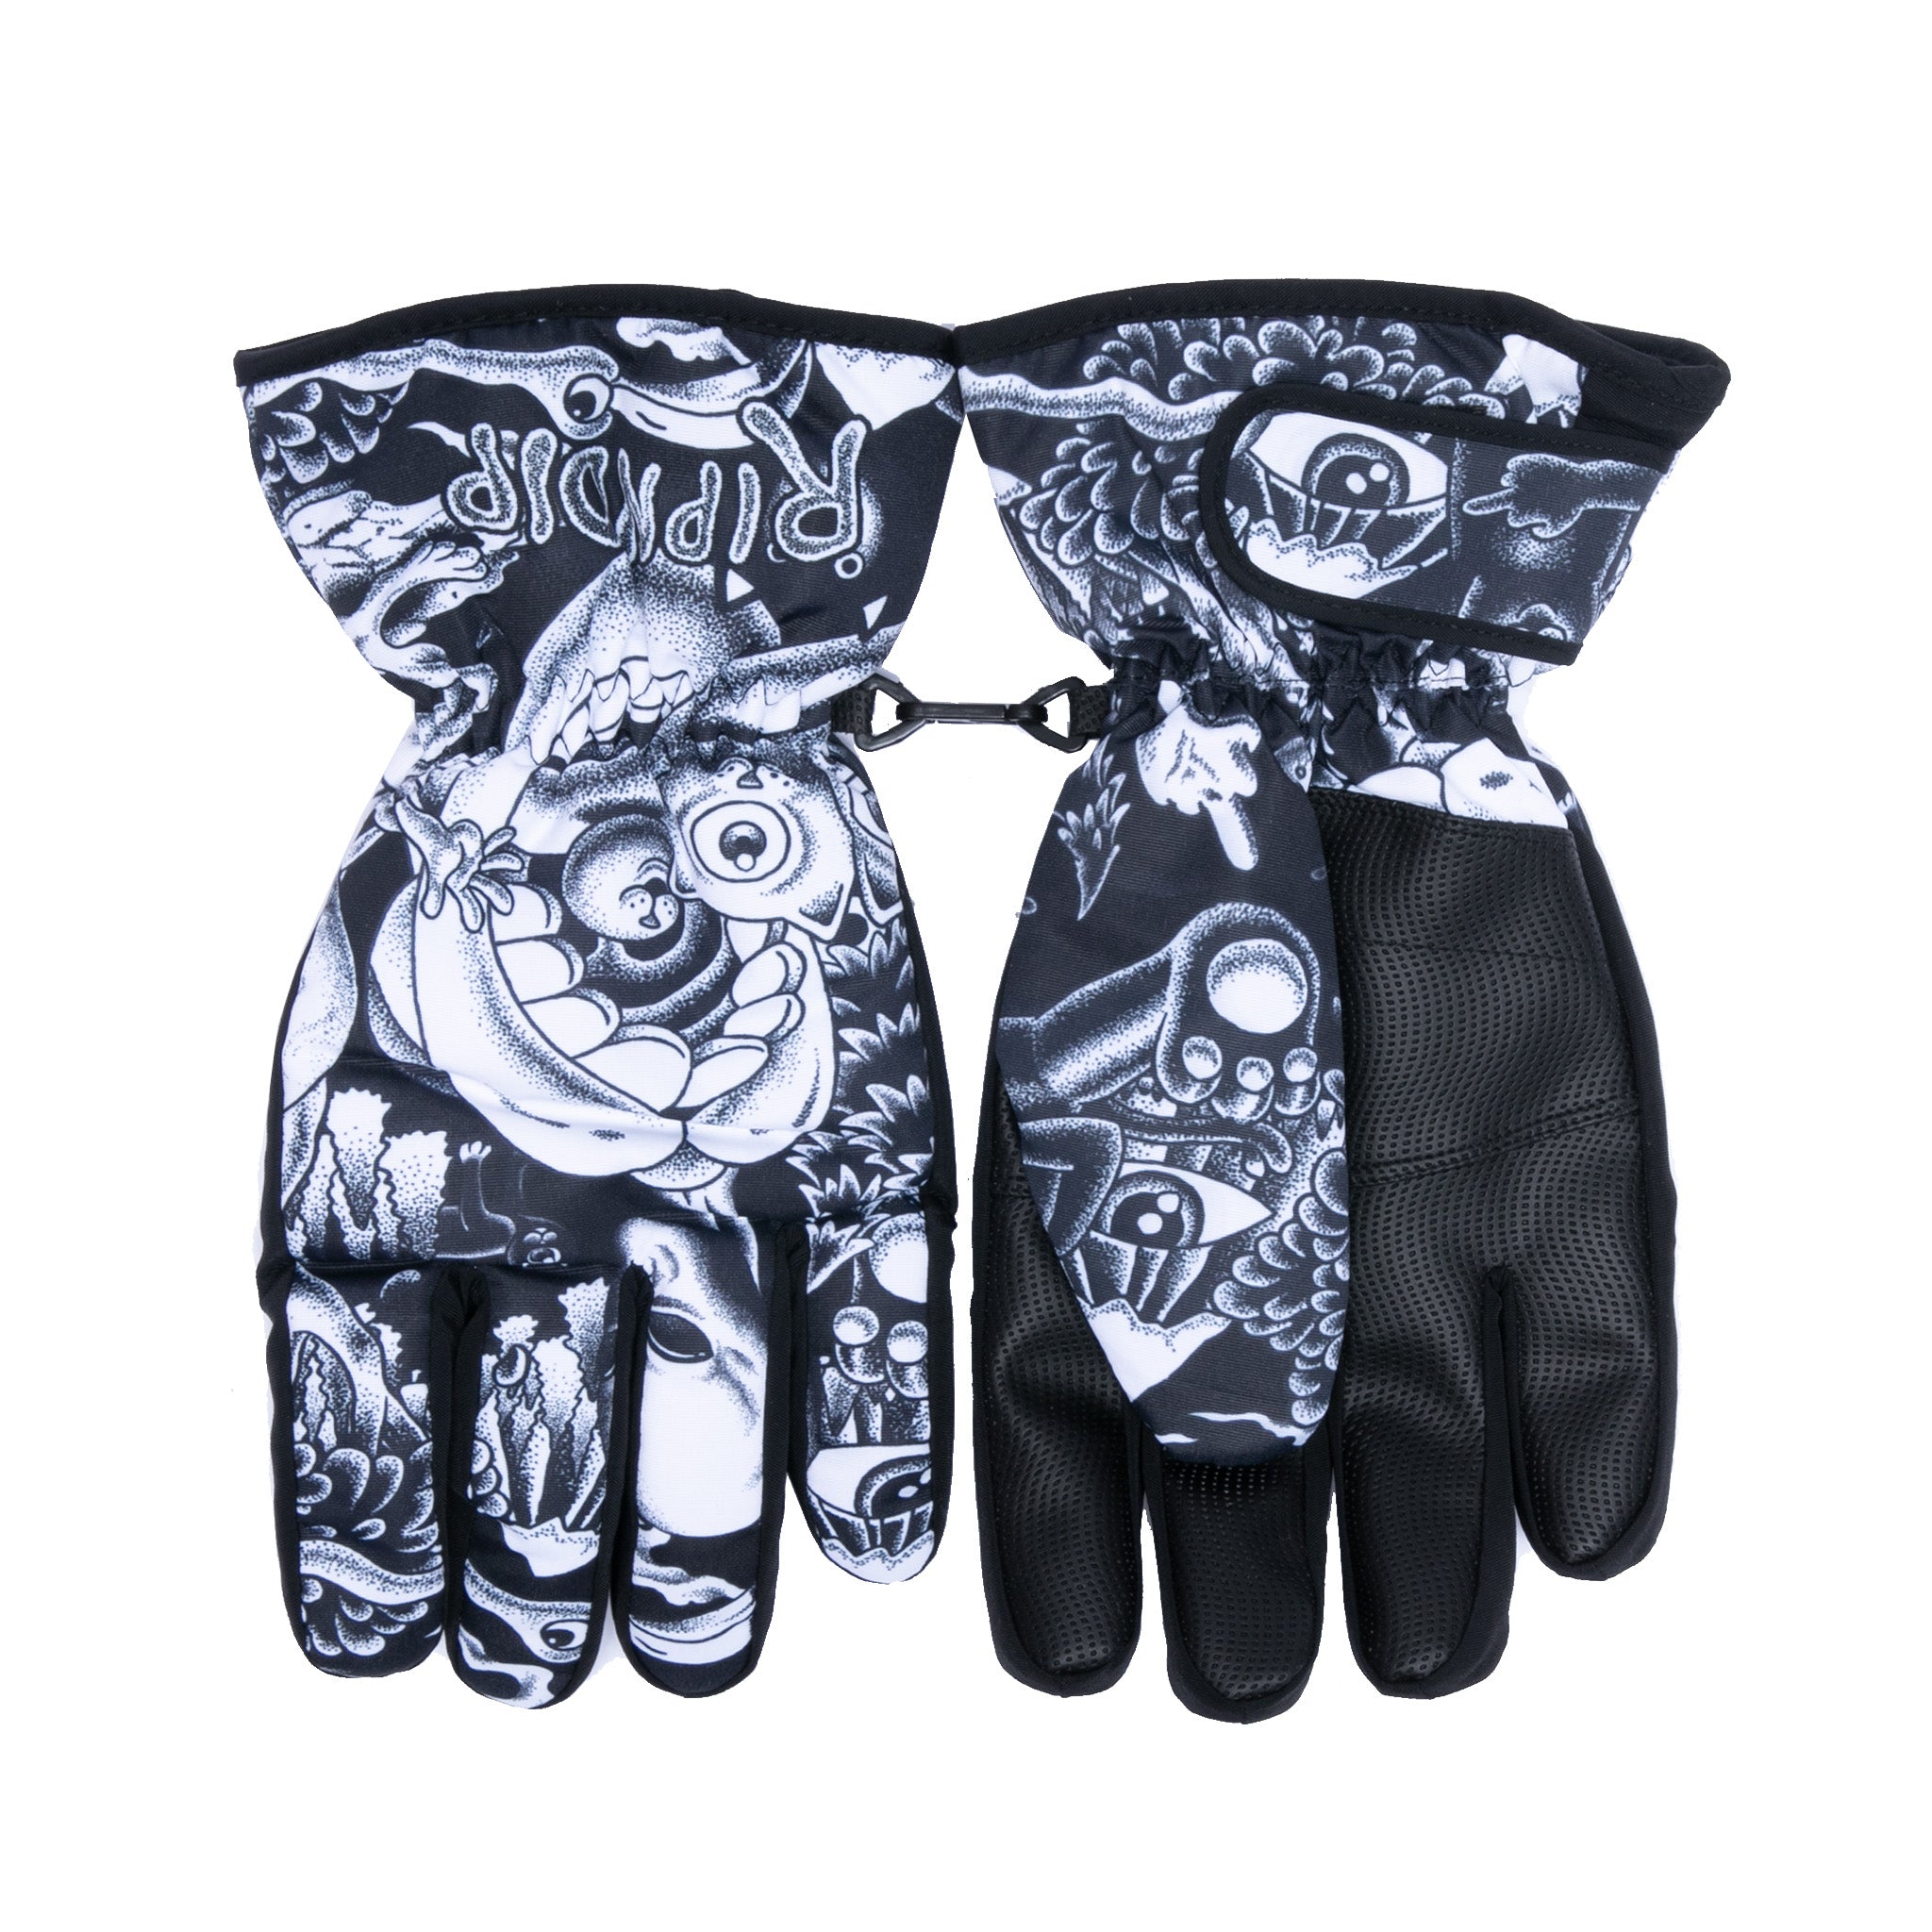 Dark Twisted Fantasy Snow Gloves (Black/White)